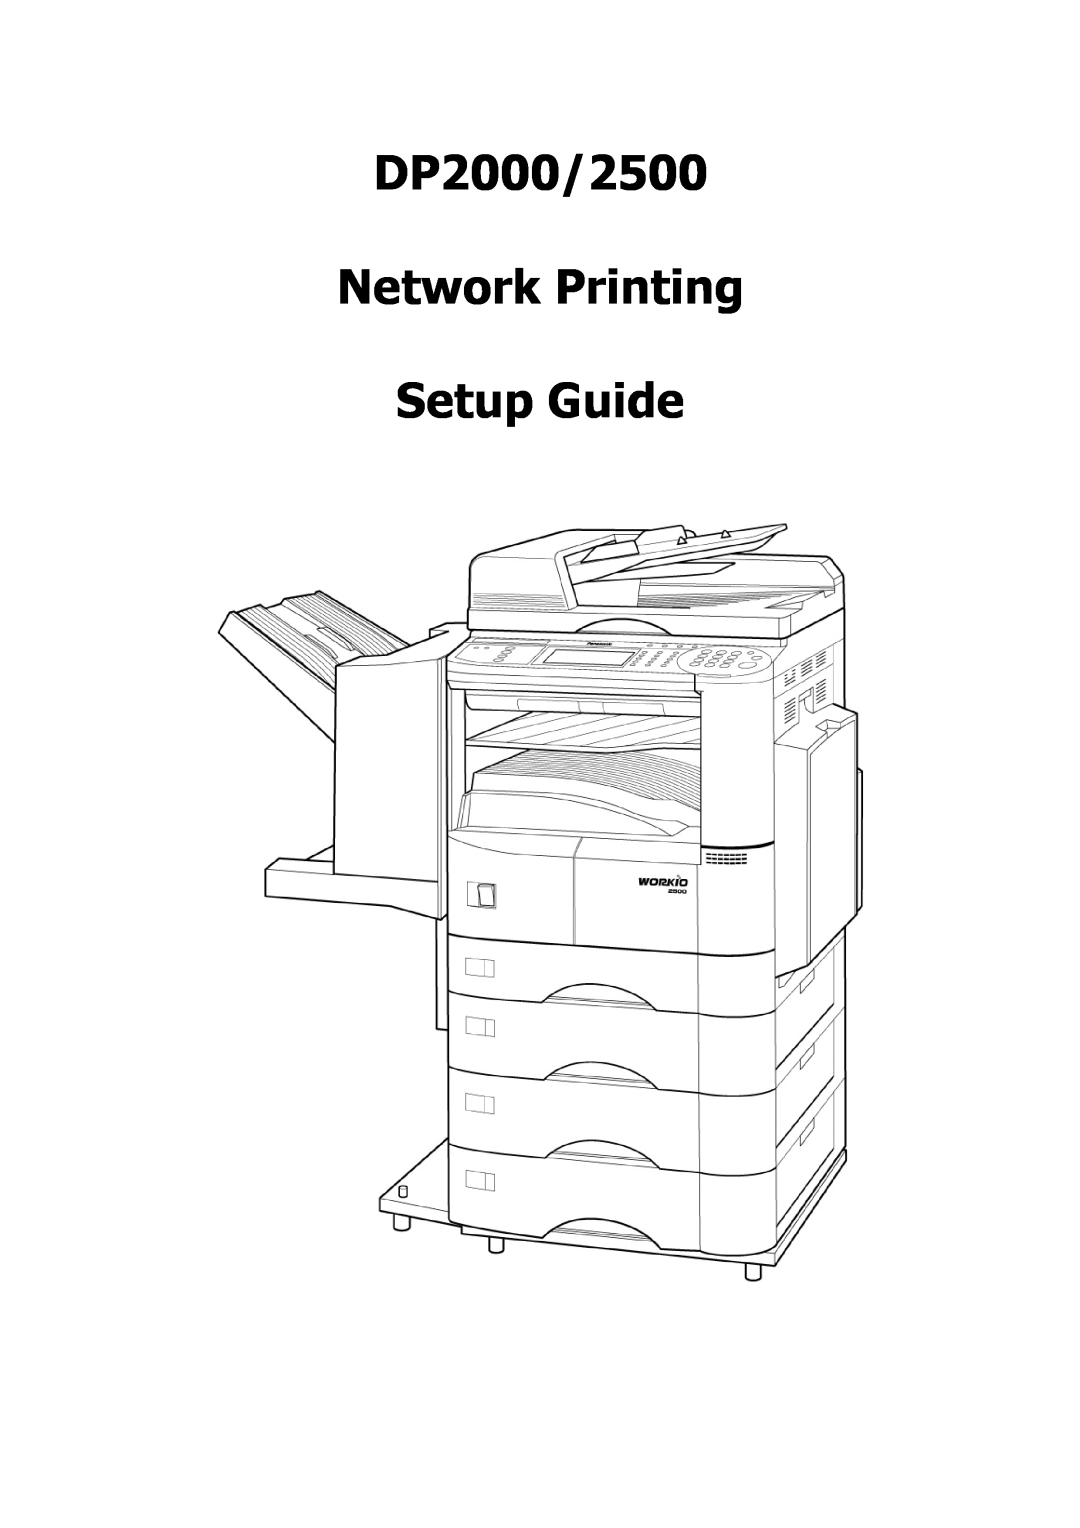 Barco setup guide DP2000/2500 Network Printing Setup Guide 